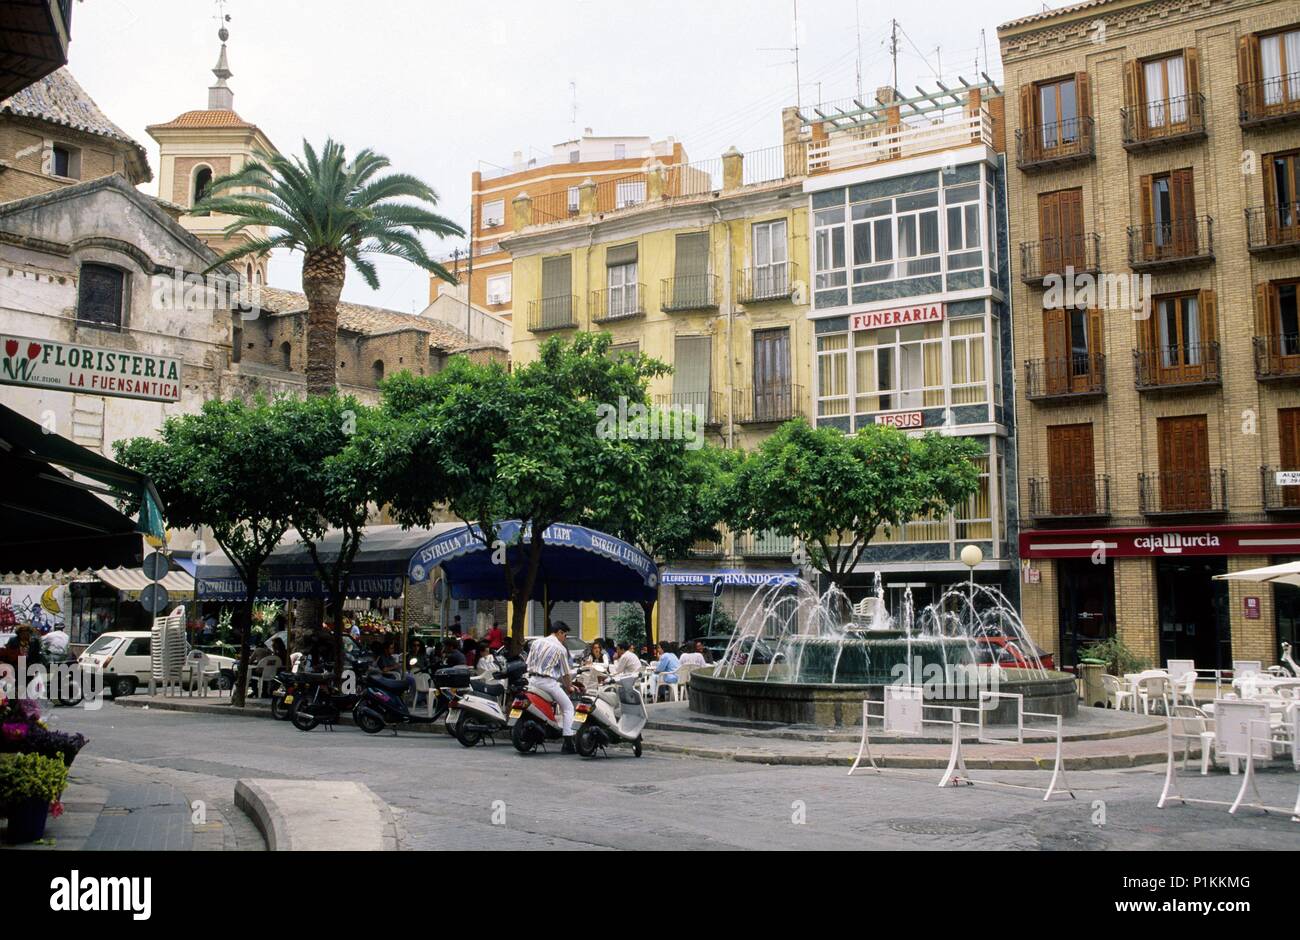 Murcia, Plaza de / las Flores square and outdoor bars Stock Photo - Alamy